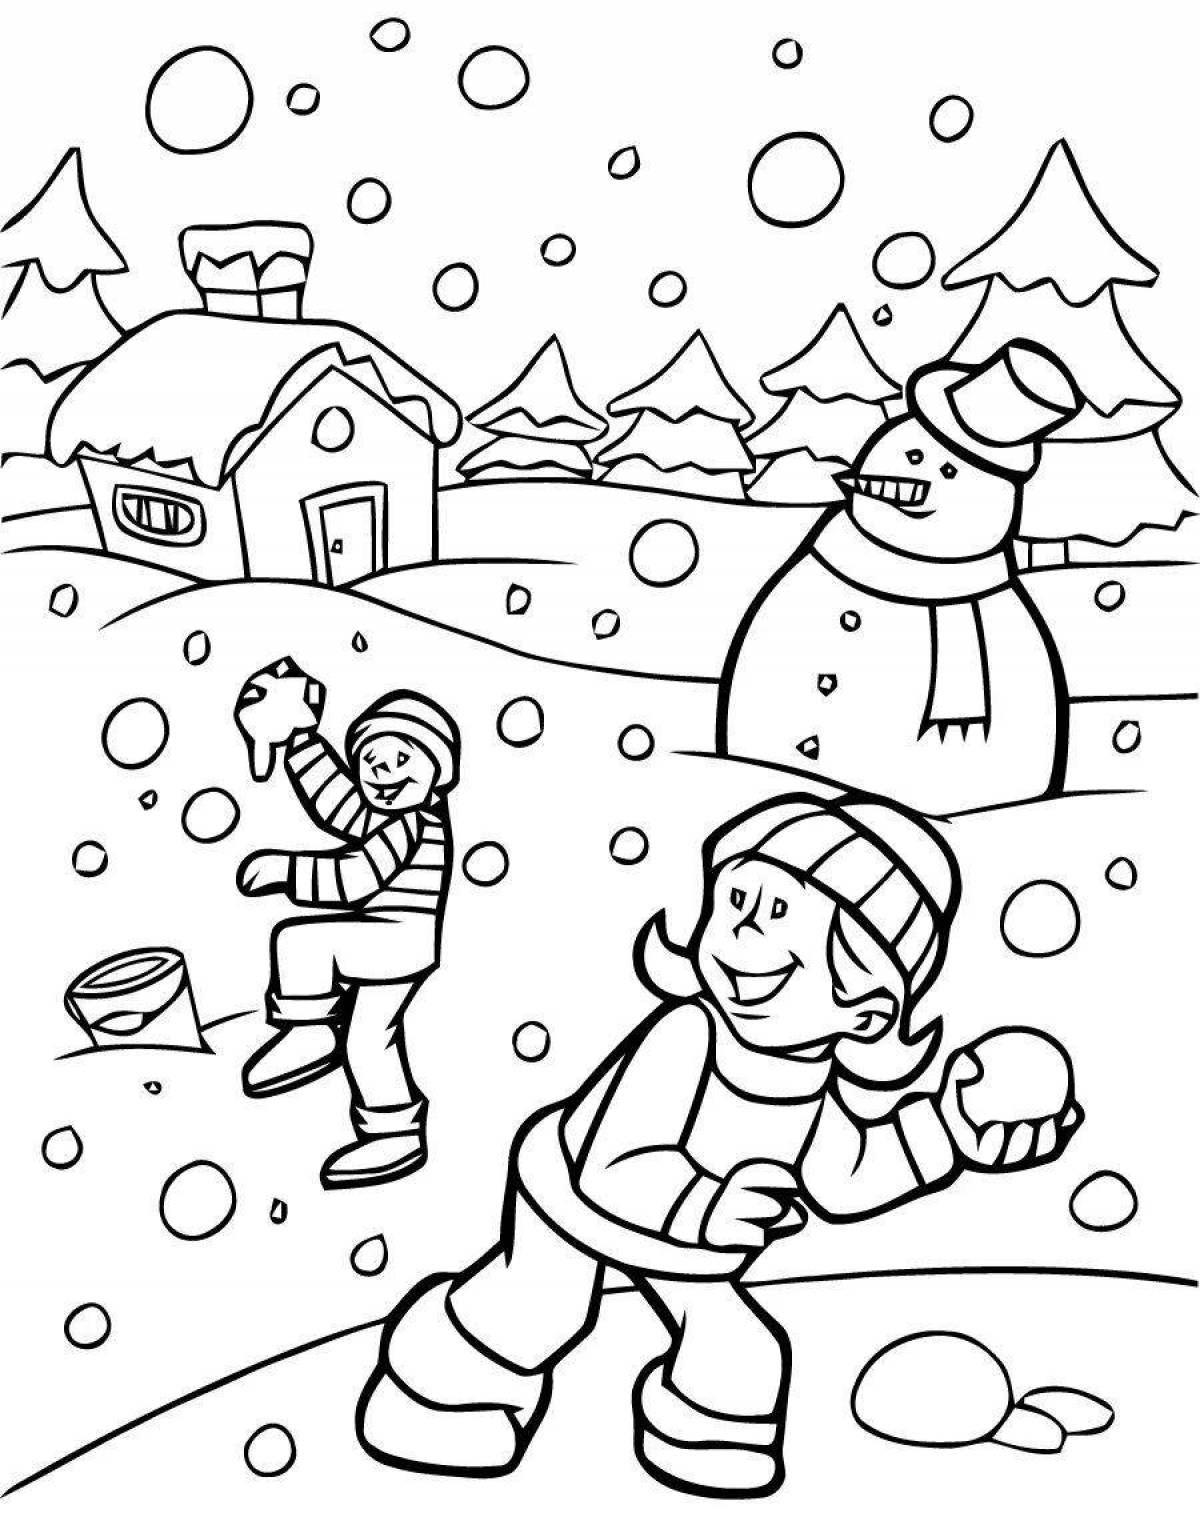 Winter creative activities for children 3-4 years old